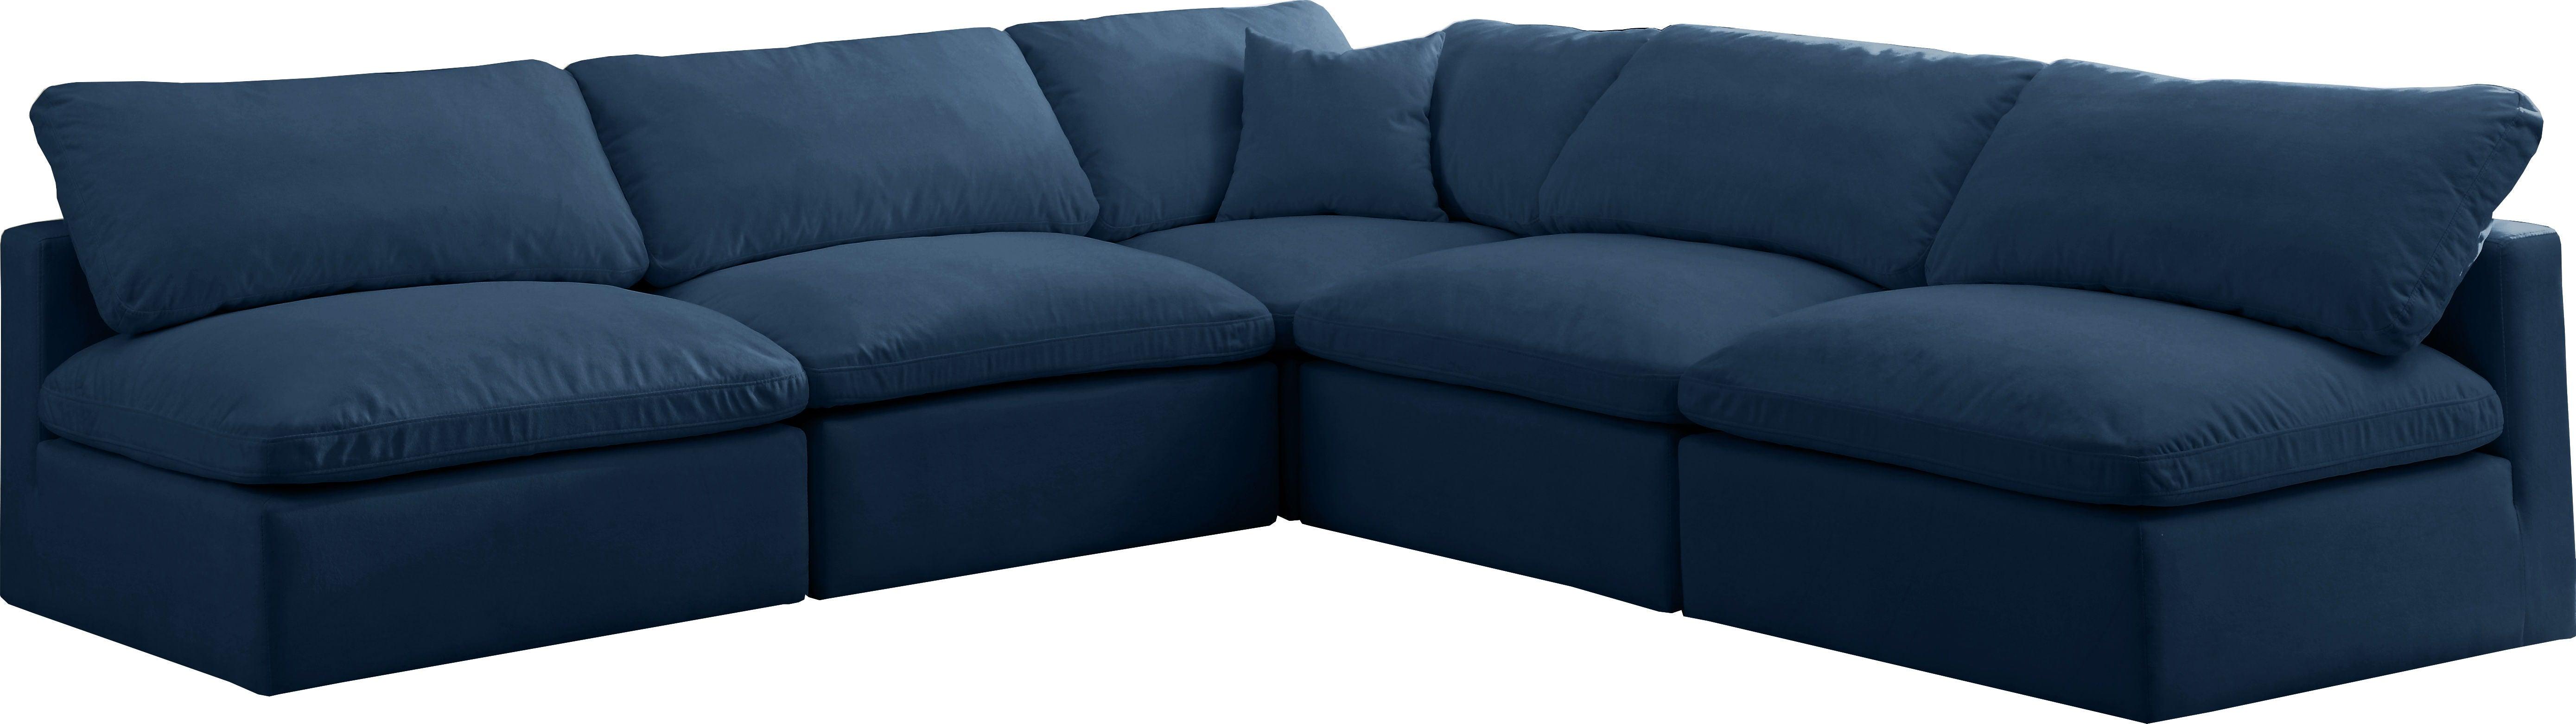 Meridian Furniture - Plush - Velvet Standart Comfort 5 Piece Modular Sectional - Navy - Fabric - 5th Avenue Furniture